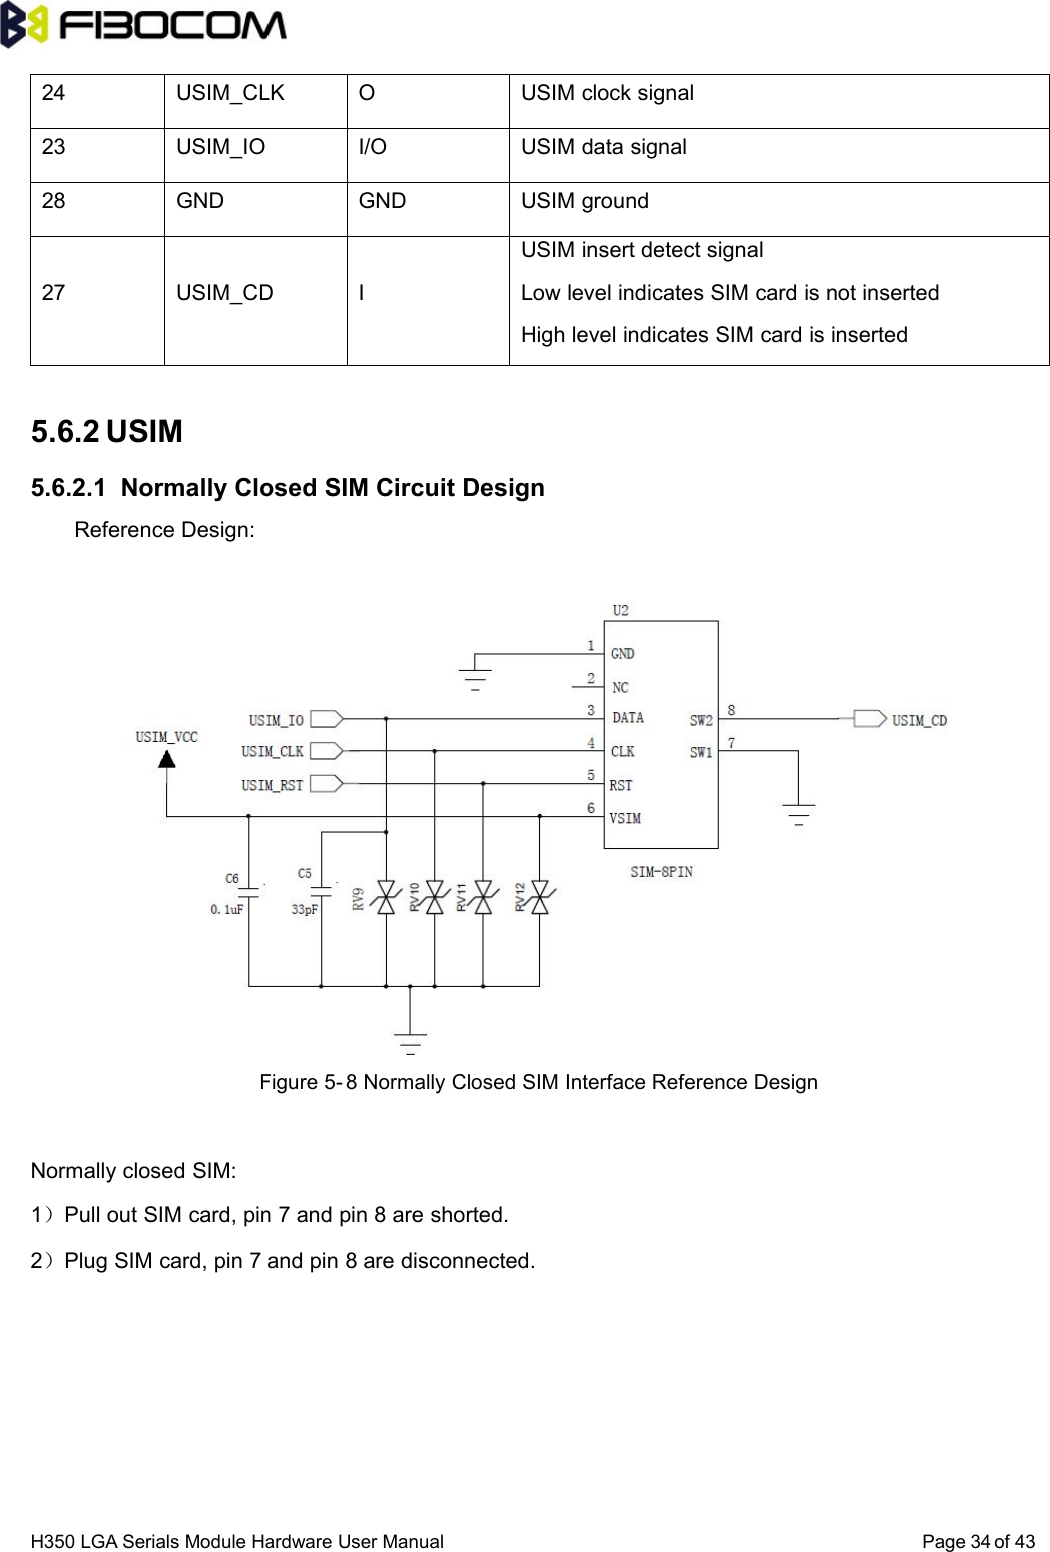 H350 LGA Serials Module Hardware User Manual Page of 433424 USIM_CLK O USIM clock signal23 USIM_IO I/O USIM data signal28 GND GND USIM ground27 USIM_CD IUSIM insert detect signalLow level indicates SIM card is not insertedHigh level indicates SIM card is inserted5.6.2 USIM5.6.2.1 Normally Closed SIM Circuit DesignReference Design:Figure 5- 8 Normally Closed SIM Interface Reference DesignNormally closed SIM:1）Pull out SIM card, pin 7 and pin 8 are shorted.2）Plug SIM card, pin 7 and pin 8 are disconnected.